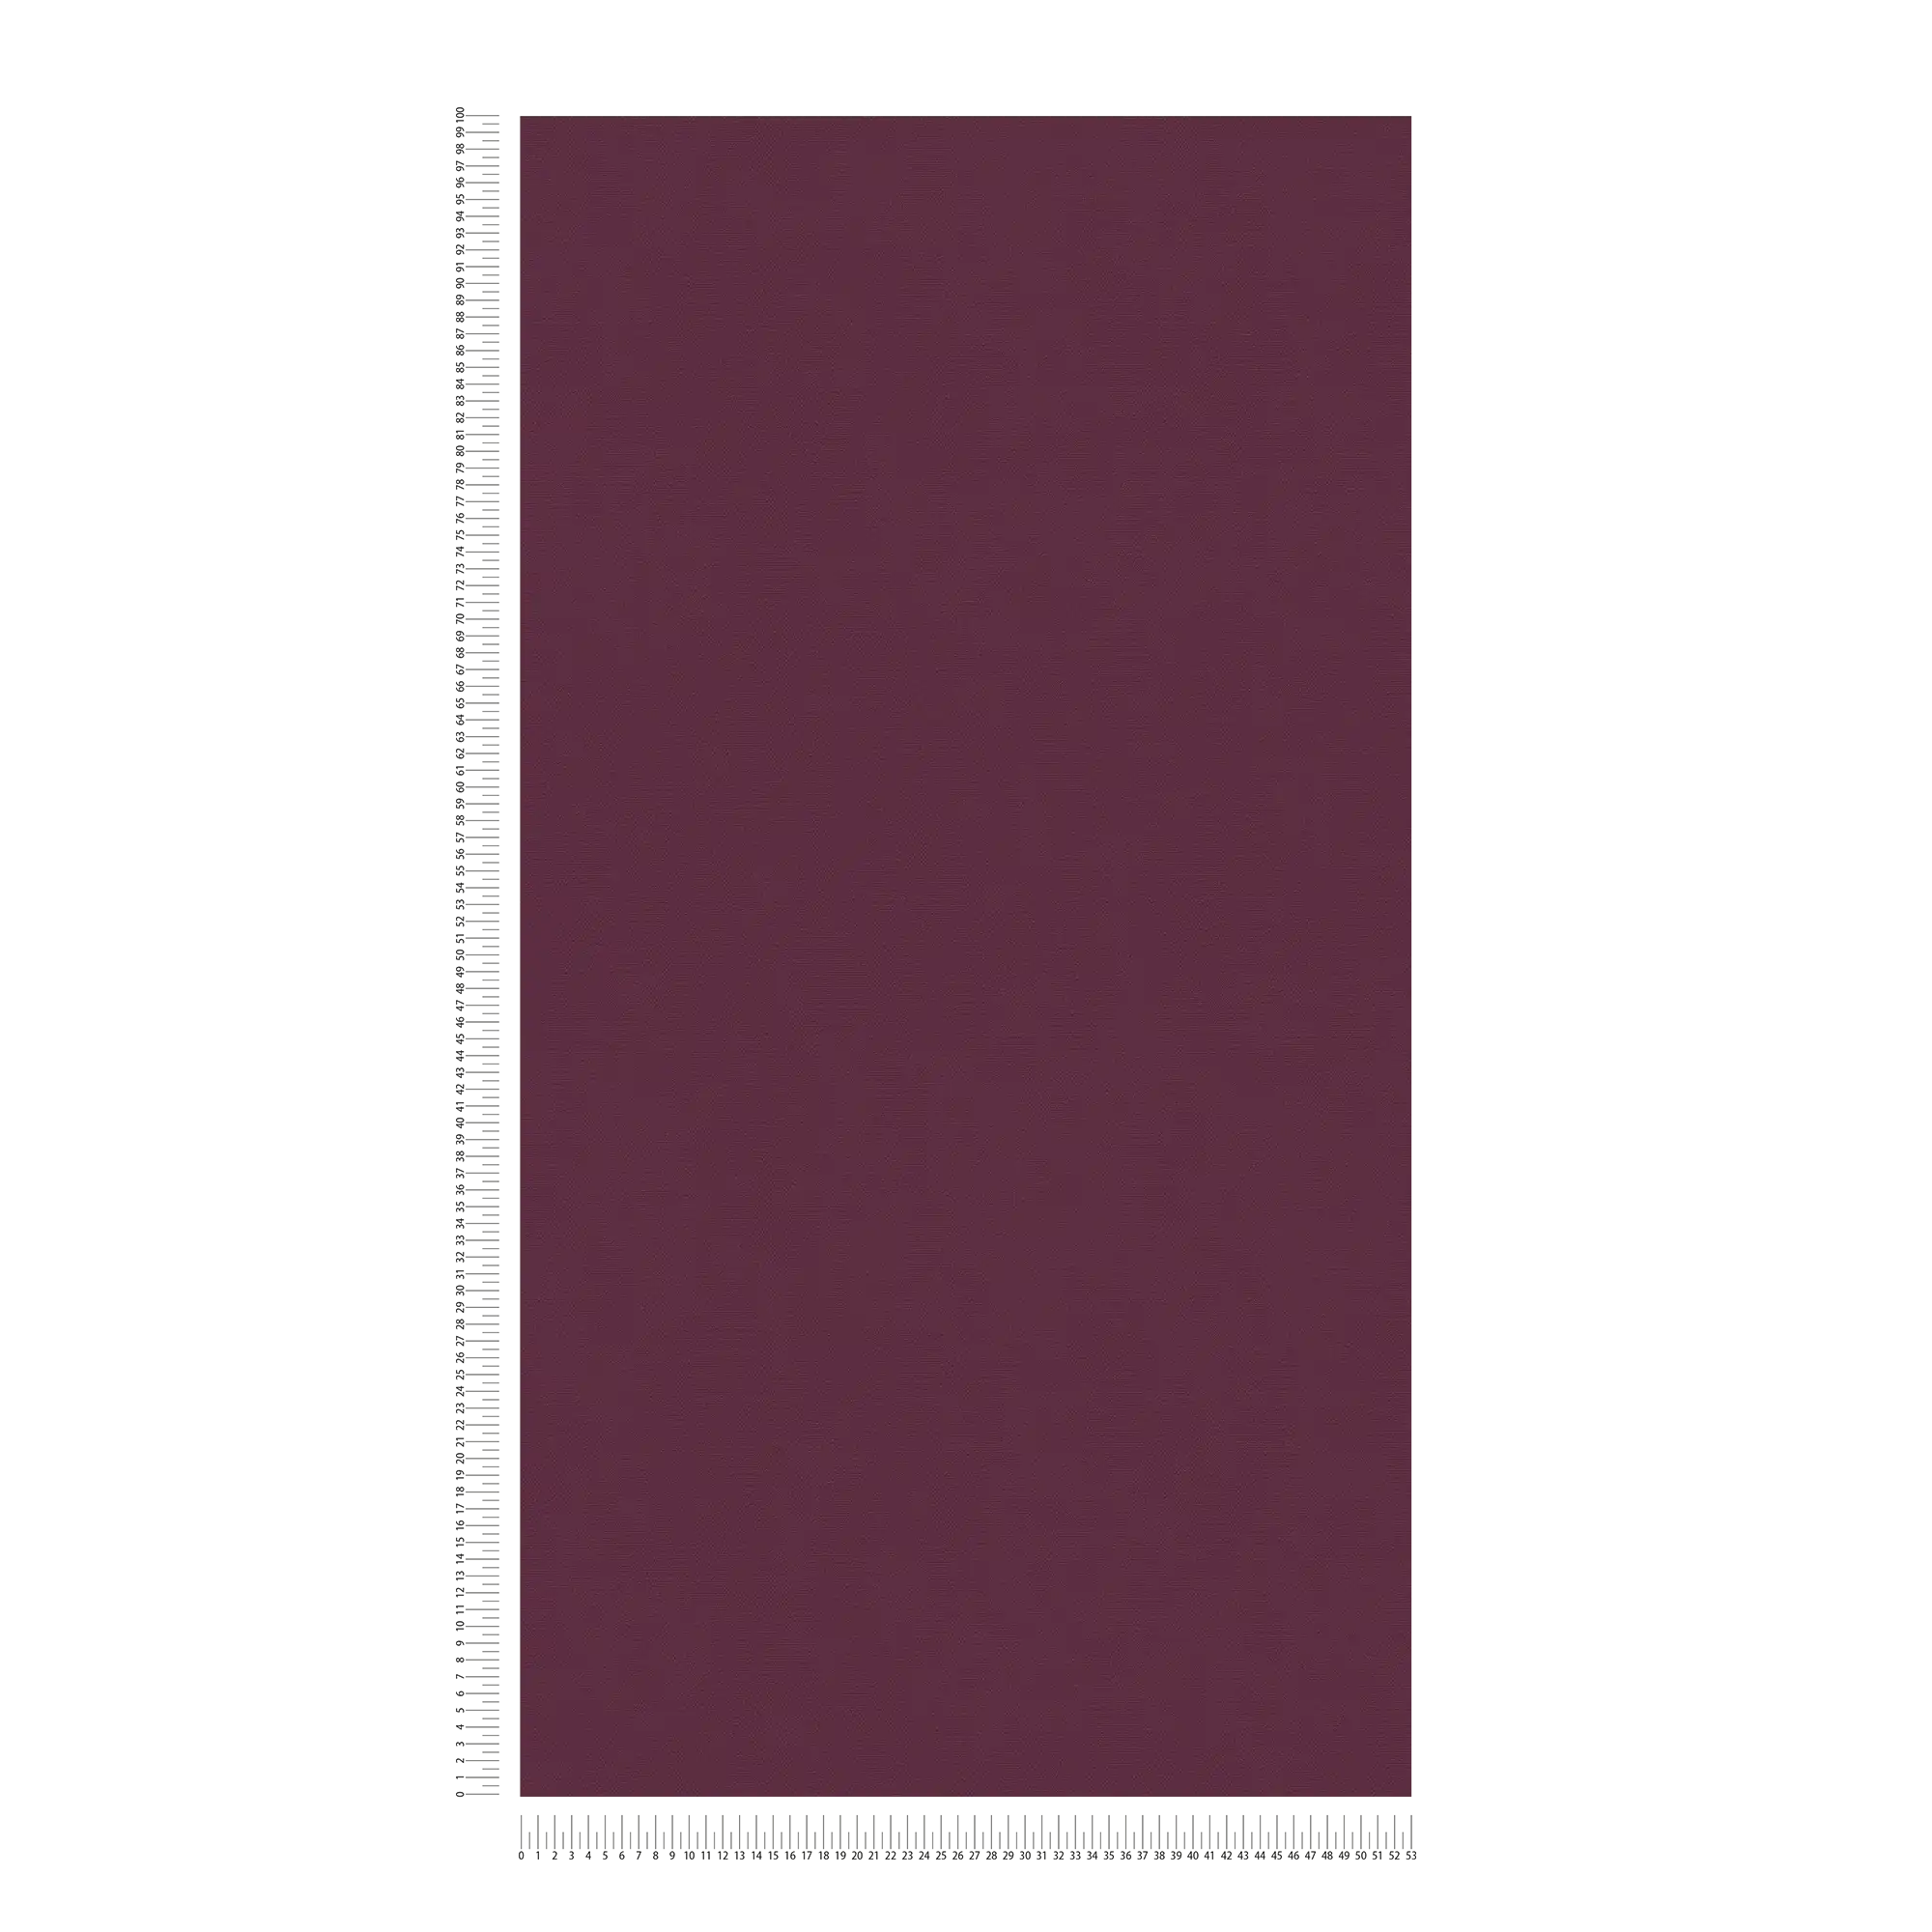             Einfarbige Tapete dunkles Lila mit Struktureffekt
        